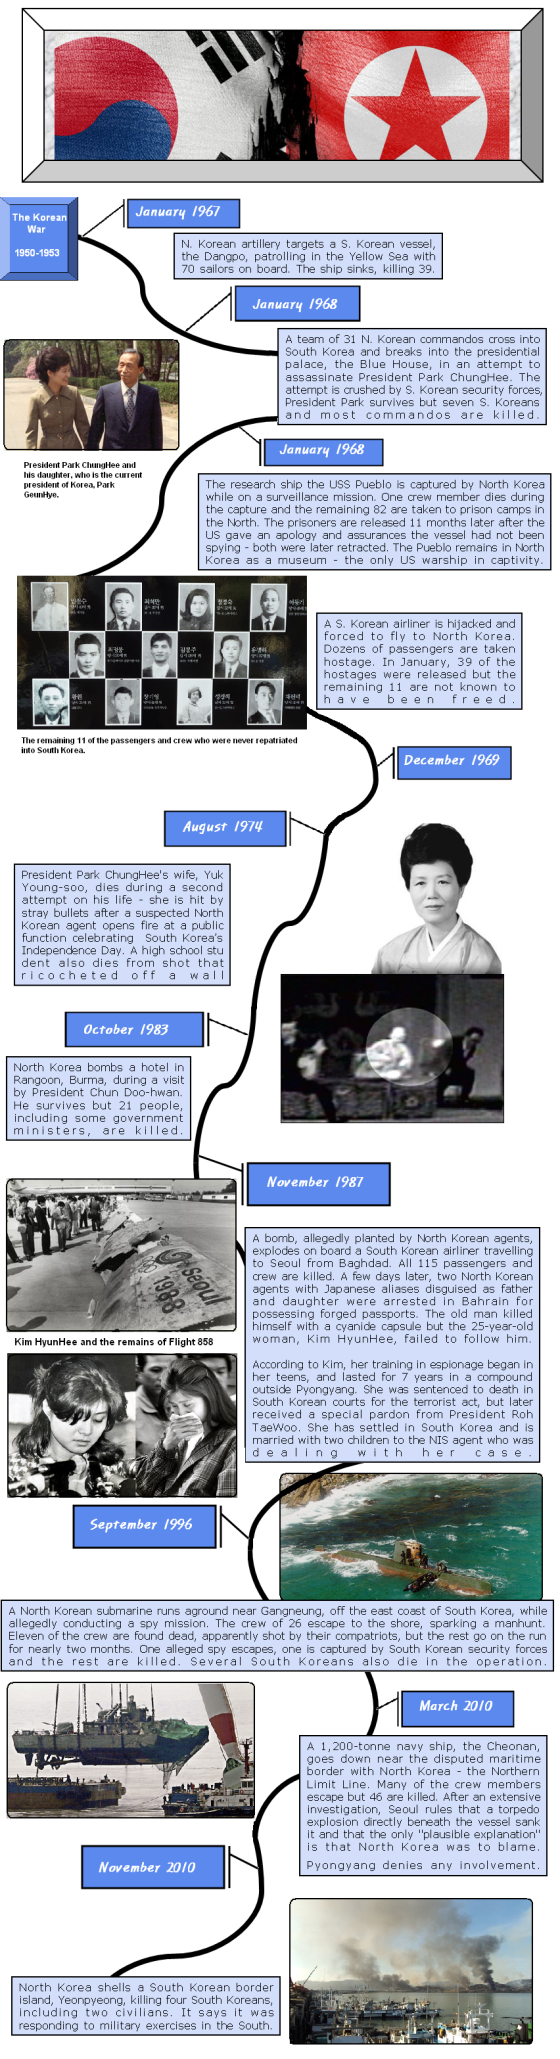 History of North Korean Attacks on South Korea